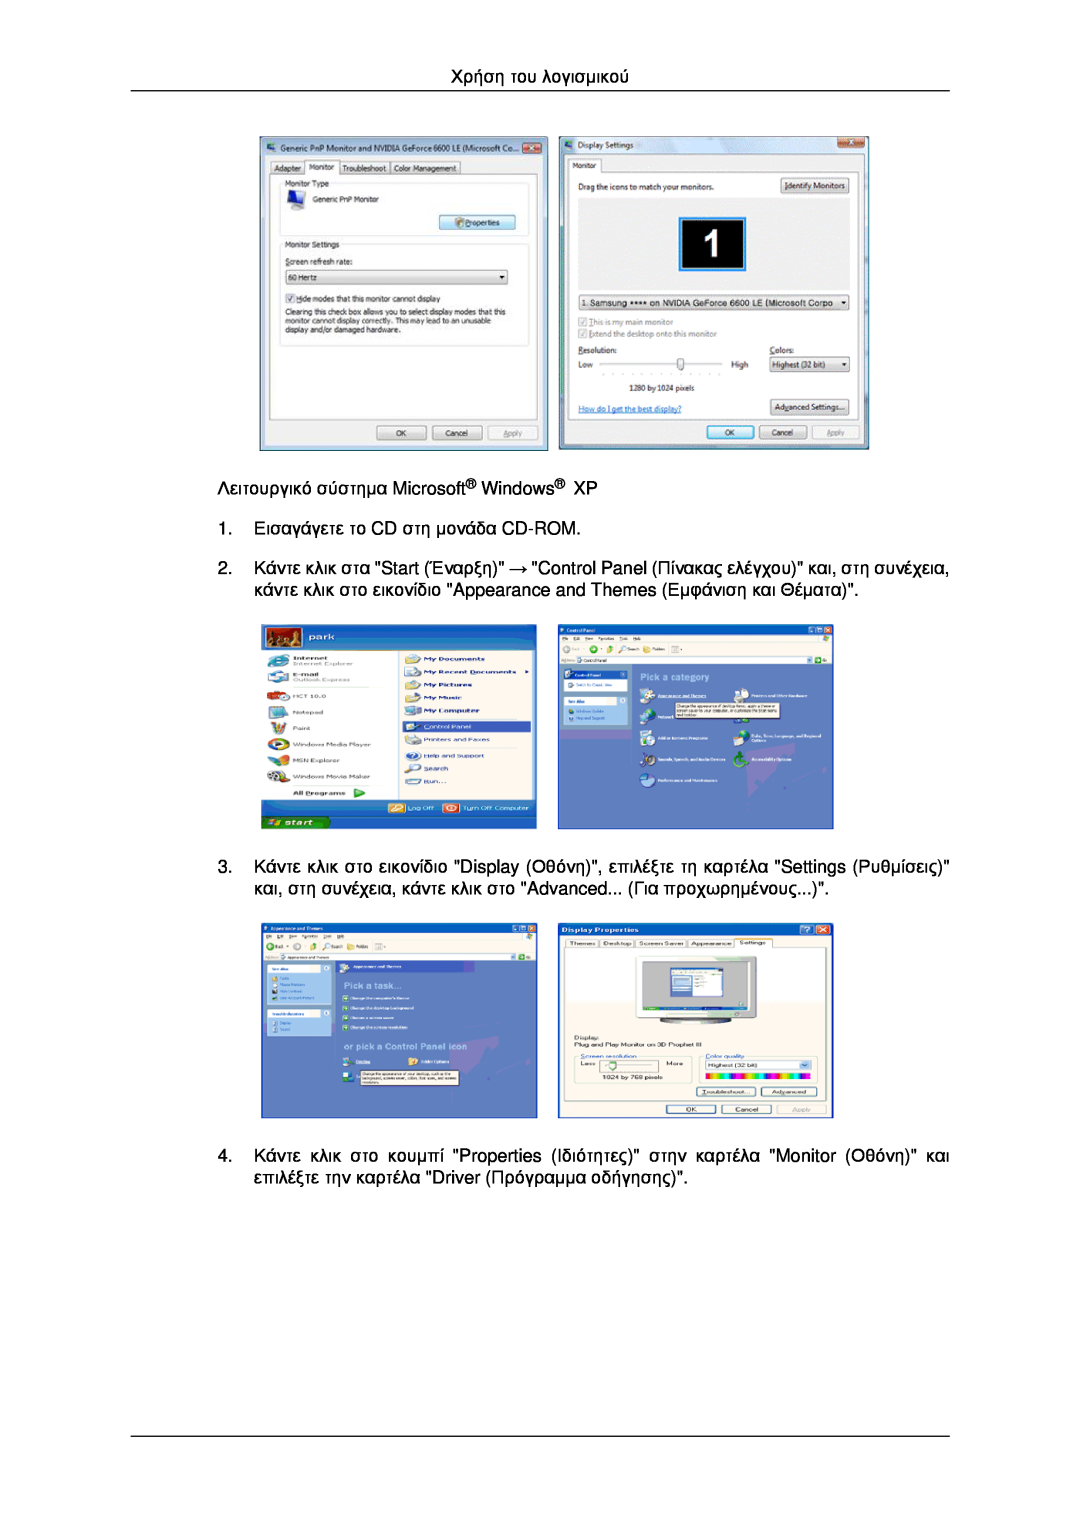 Samsung LH40MRTLBC/EN, LH46MRPLBF/EN, LH40MRPLBF/EN manual Χρήση του λογισμικού, Λειτουργικό σύστημα Microsoft Windows XP 